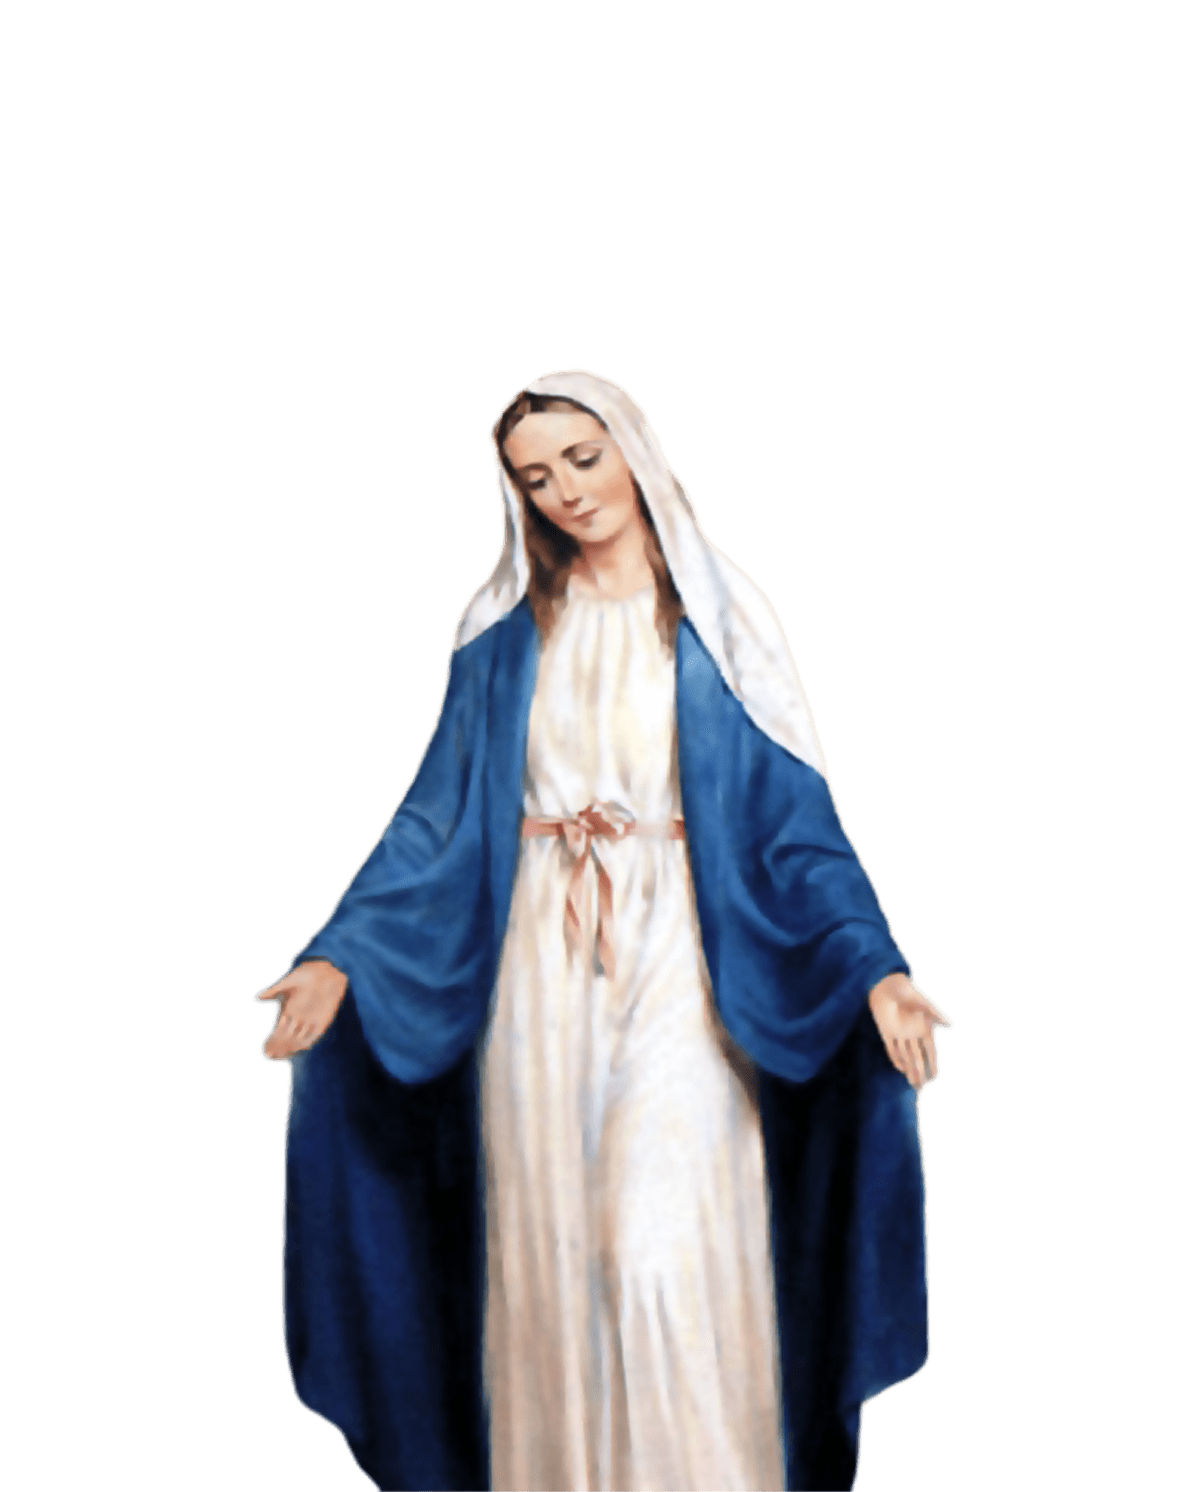 Virgin Mary - Virgin Mary Transparent Background - HD Wallpaper 